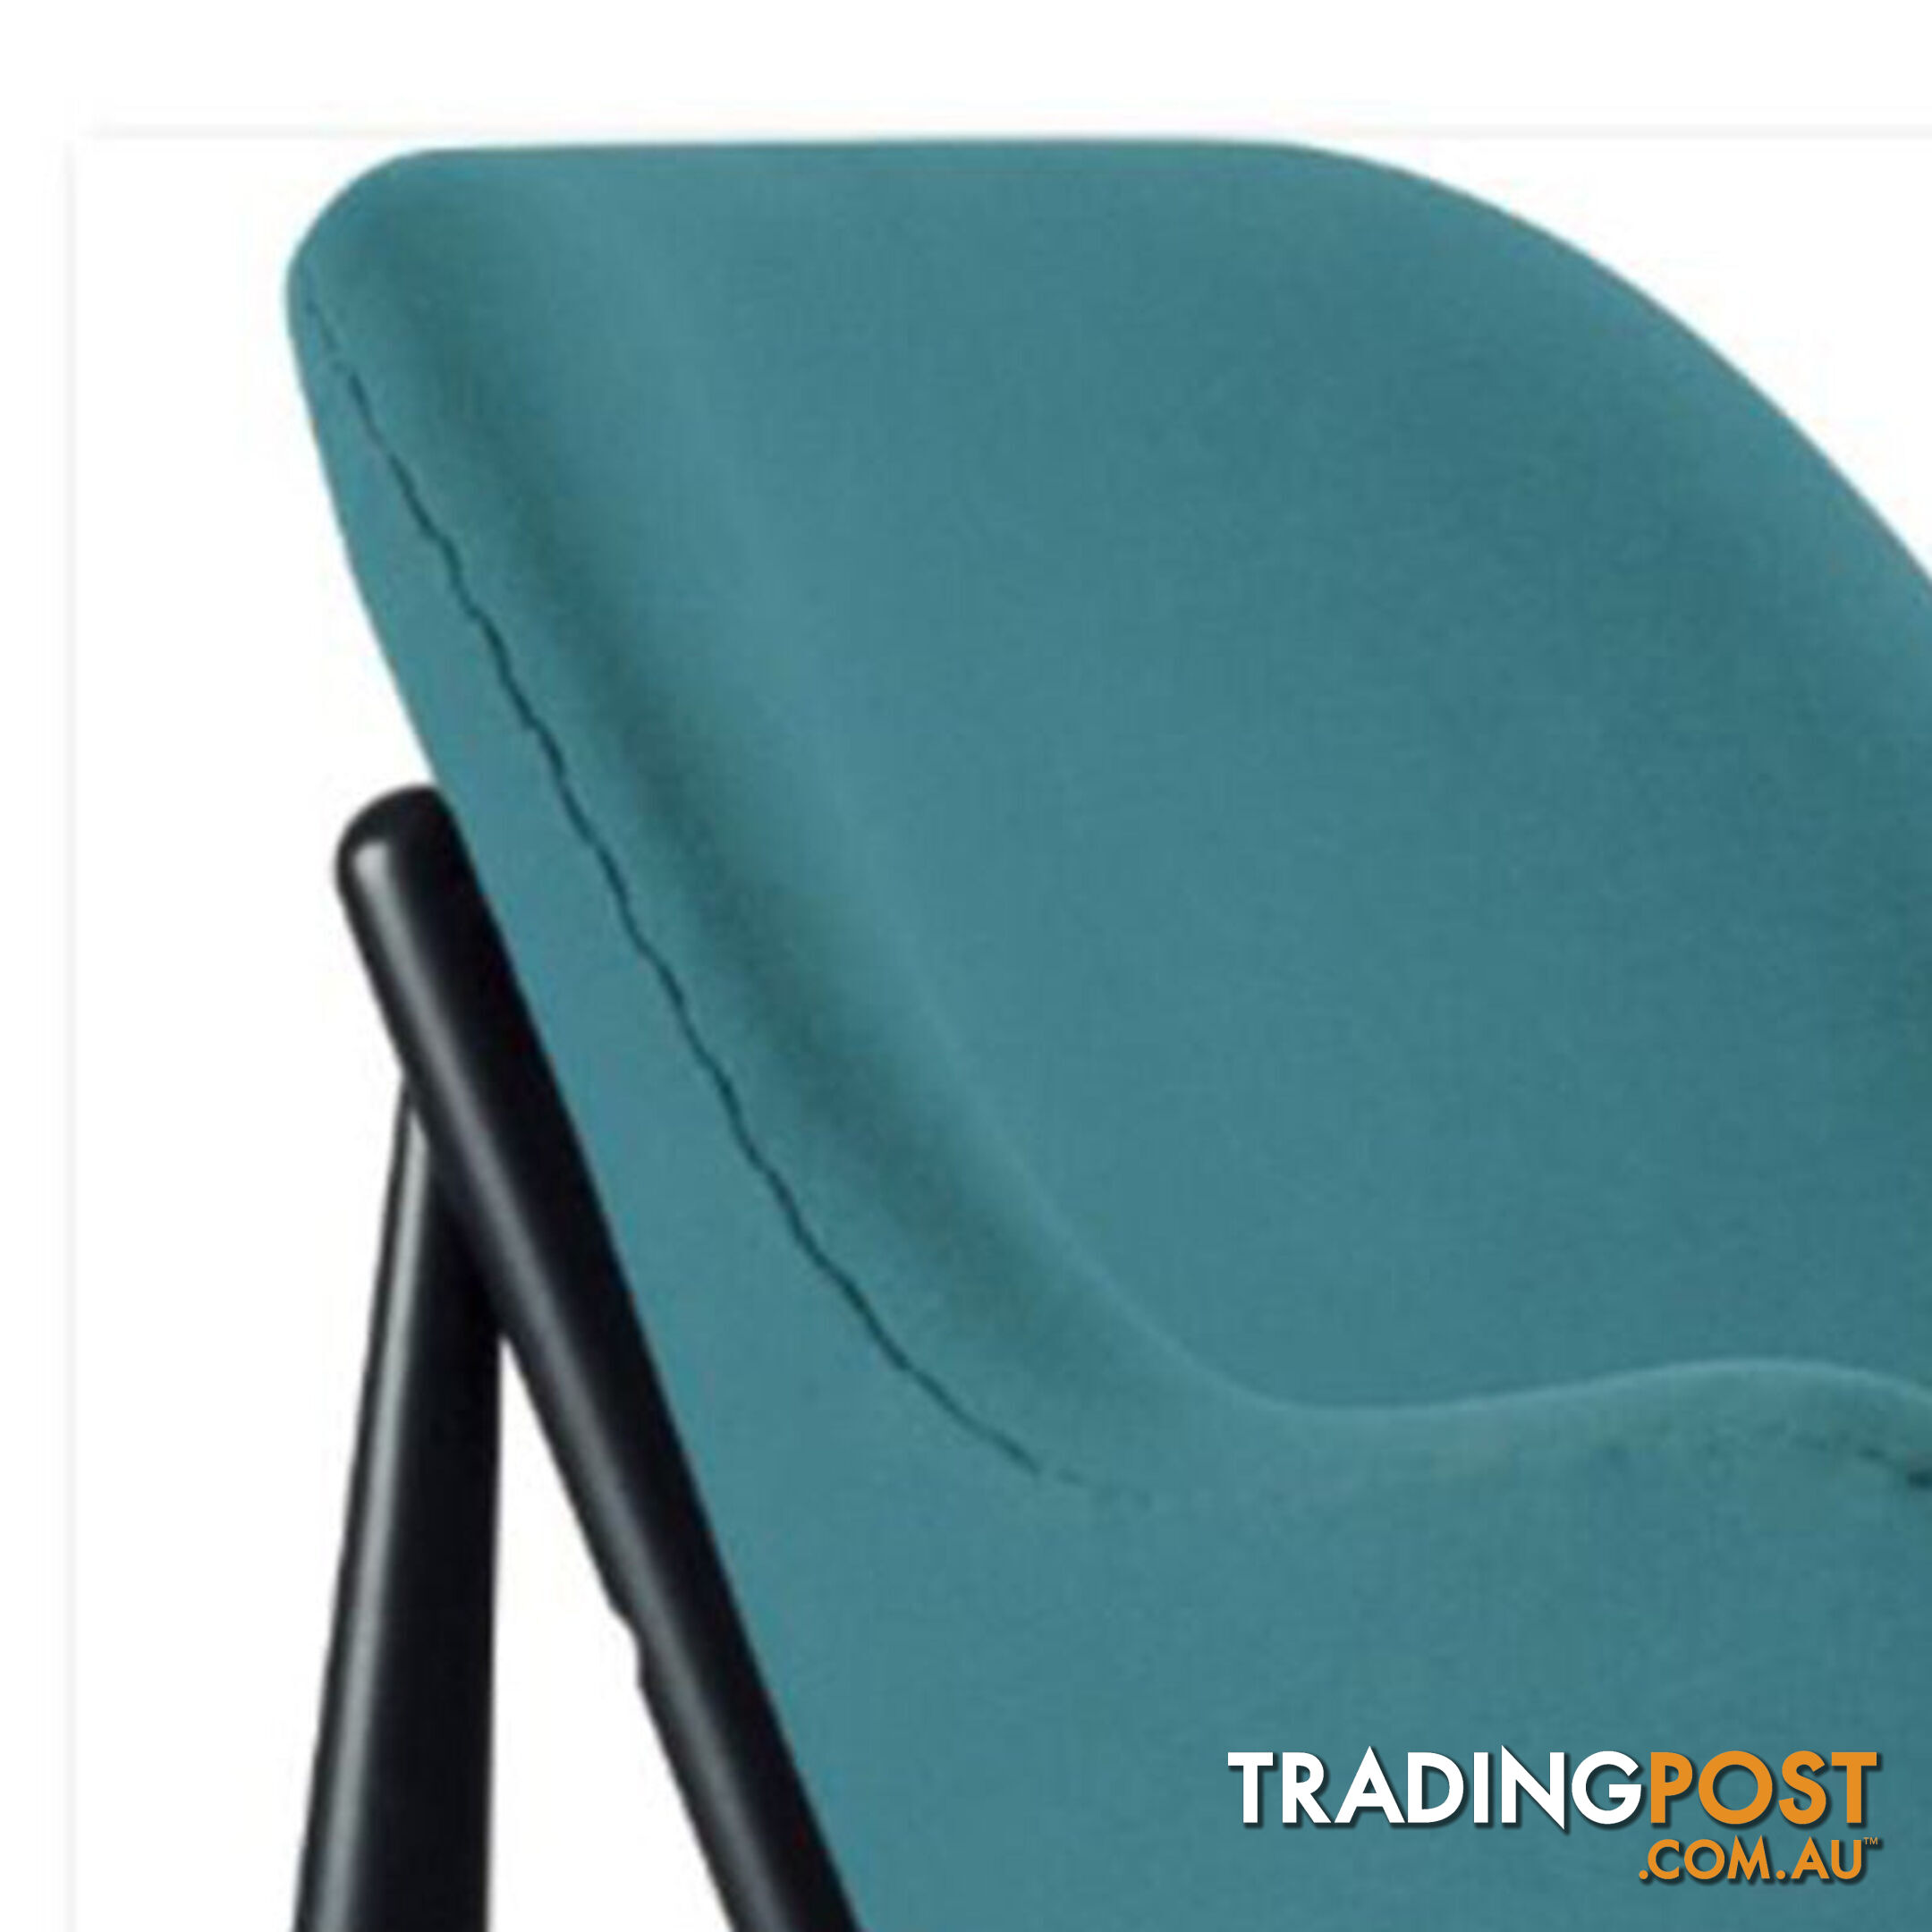 VERONIC Lounge Chair - Teal & Black - VERONIC_114_733 - 9334719012308